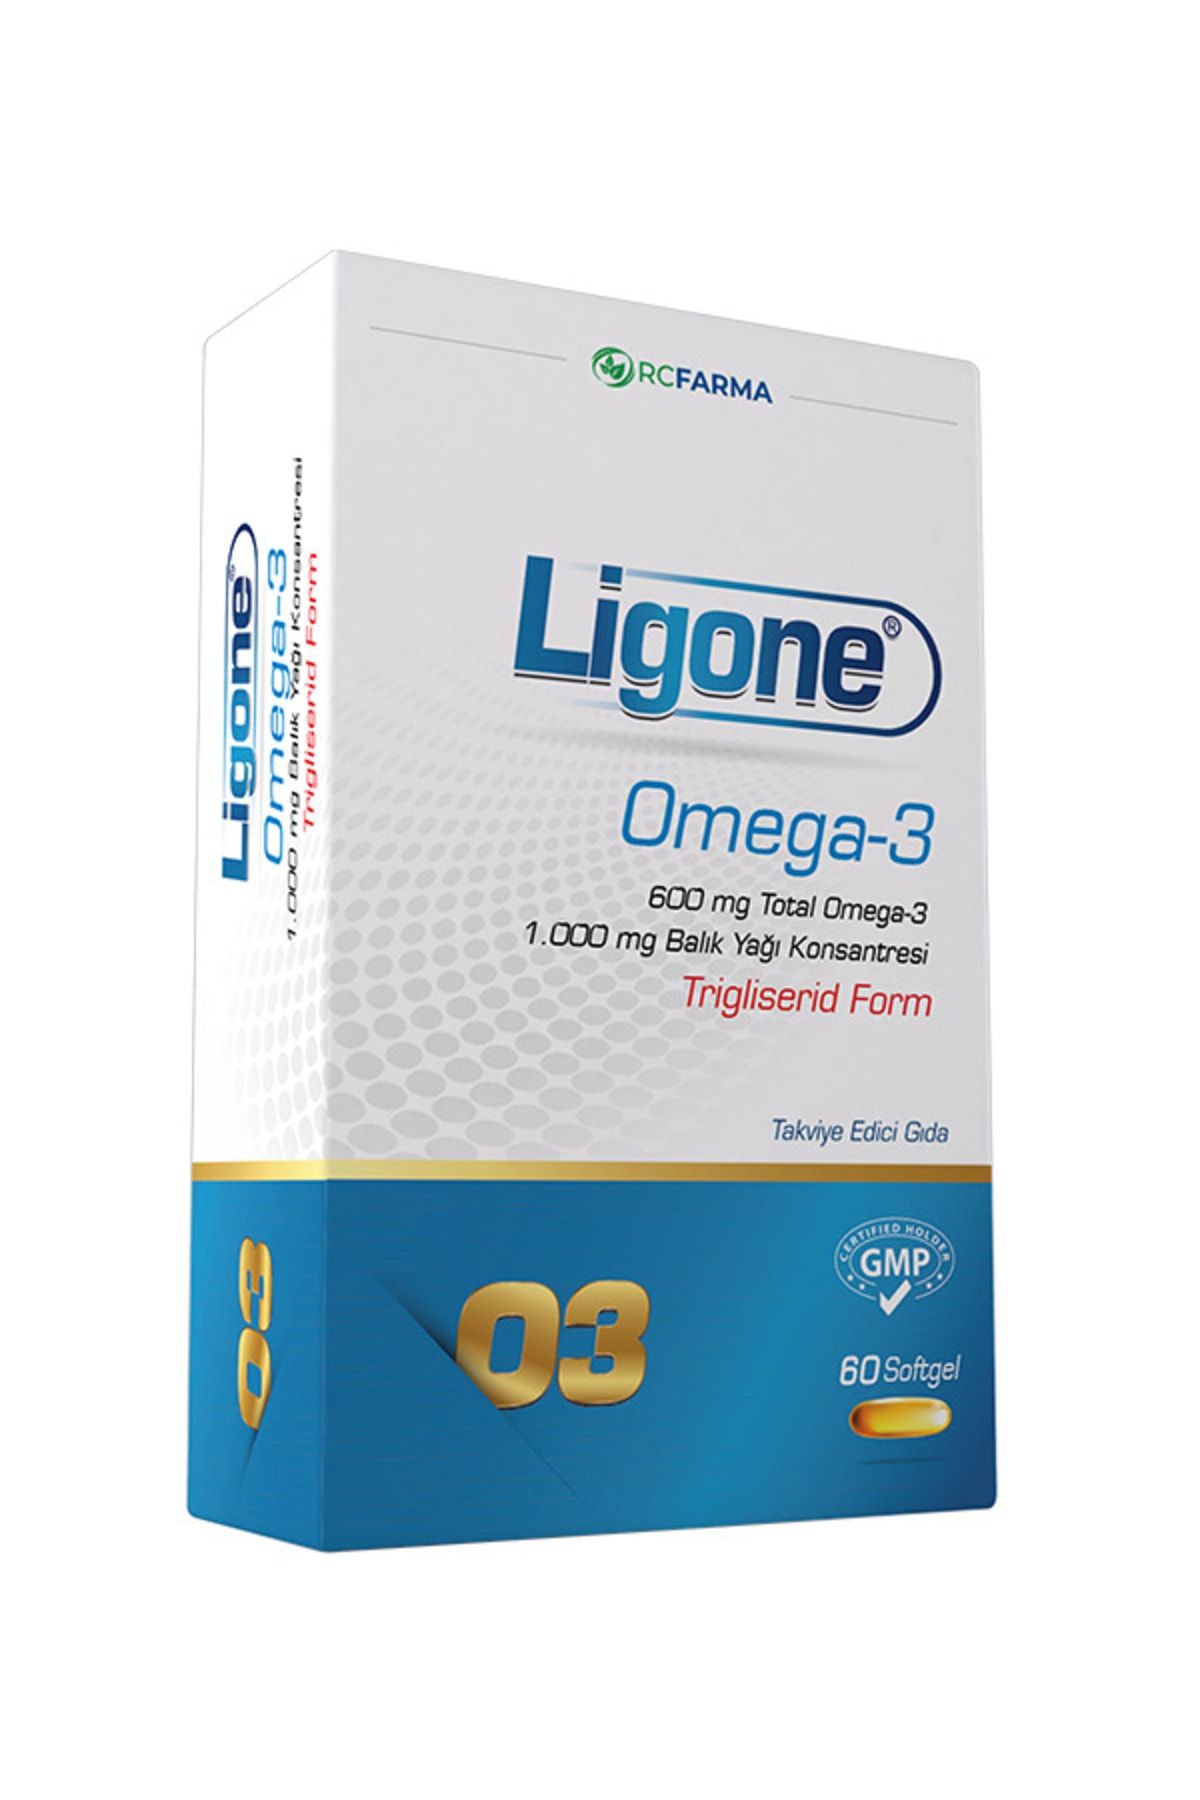 Ligone Omega-3 Softjel